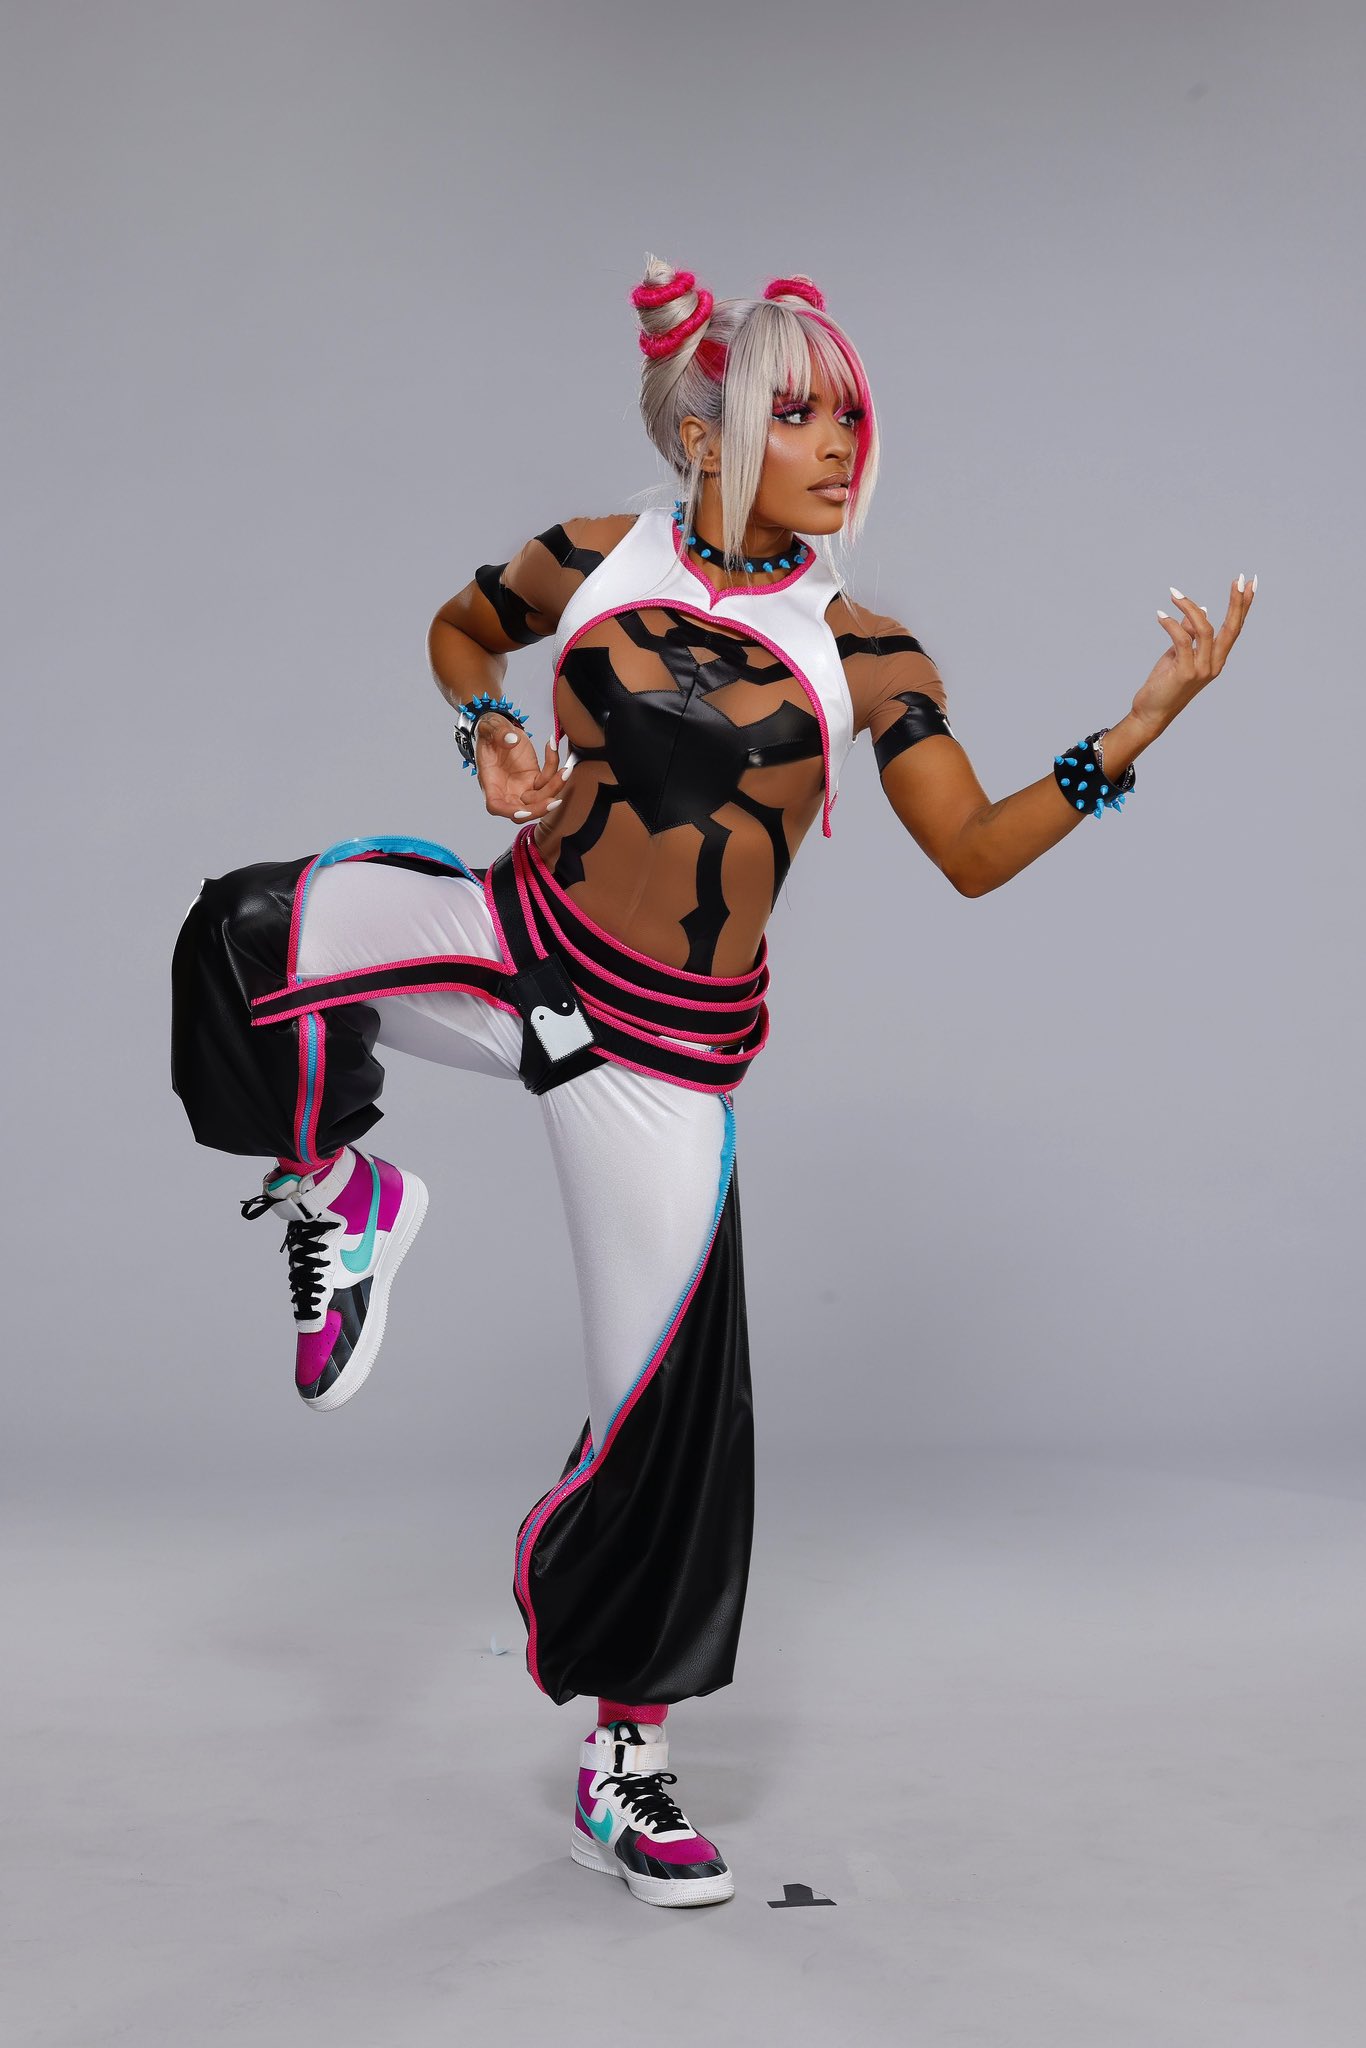 Zelina Vega se presenta con traje de Juri de Street Fighter 6 en Royal Rumble 4